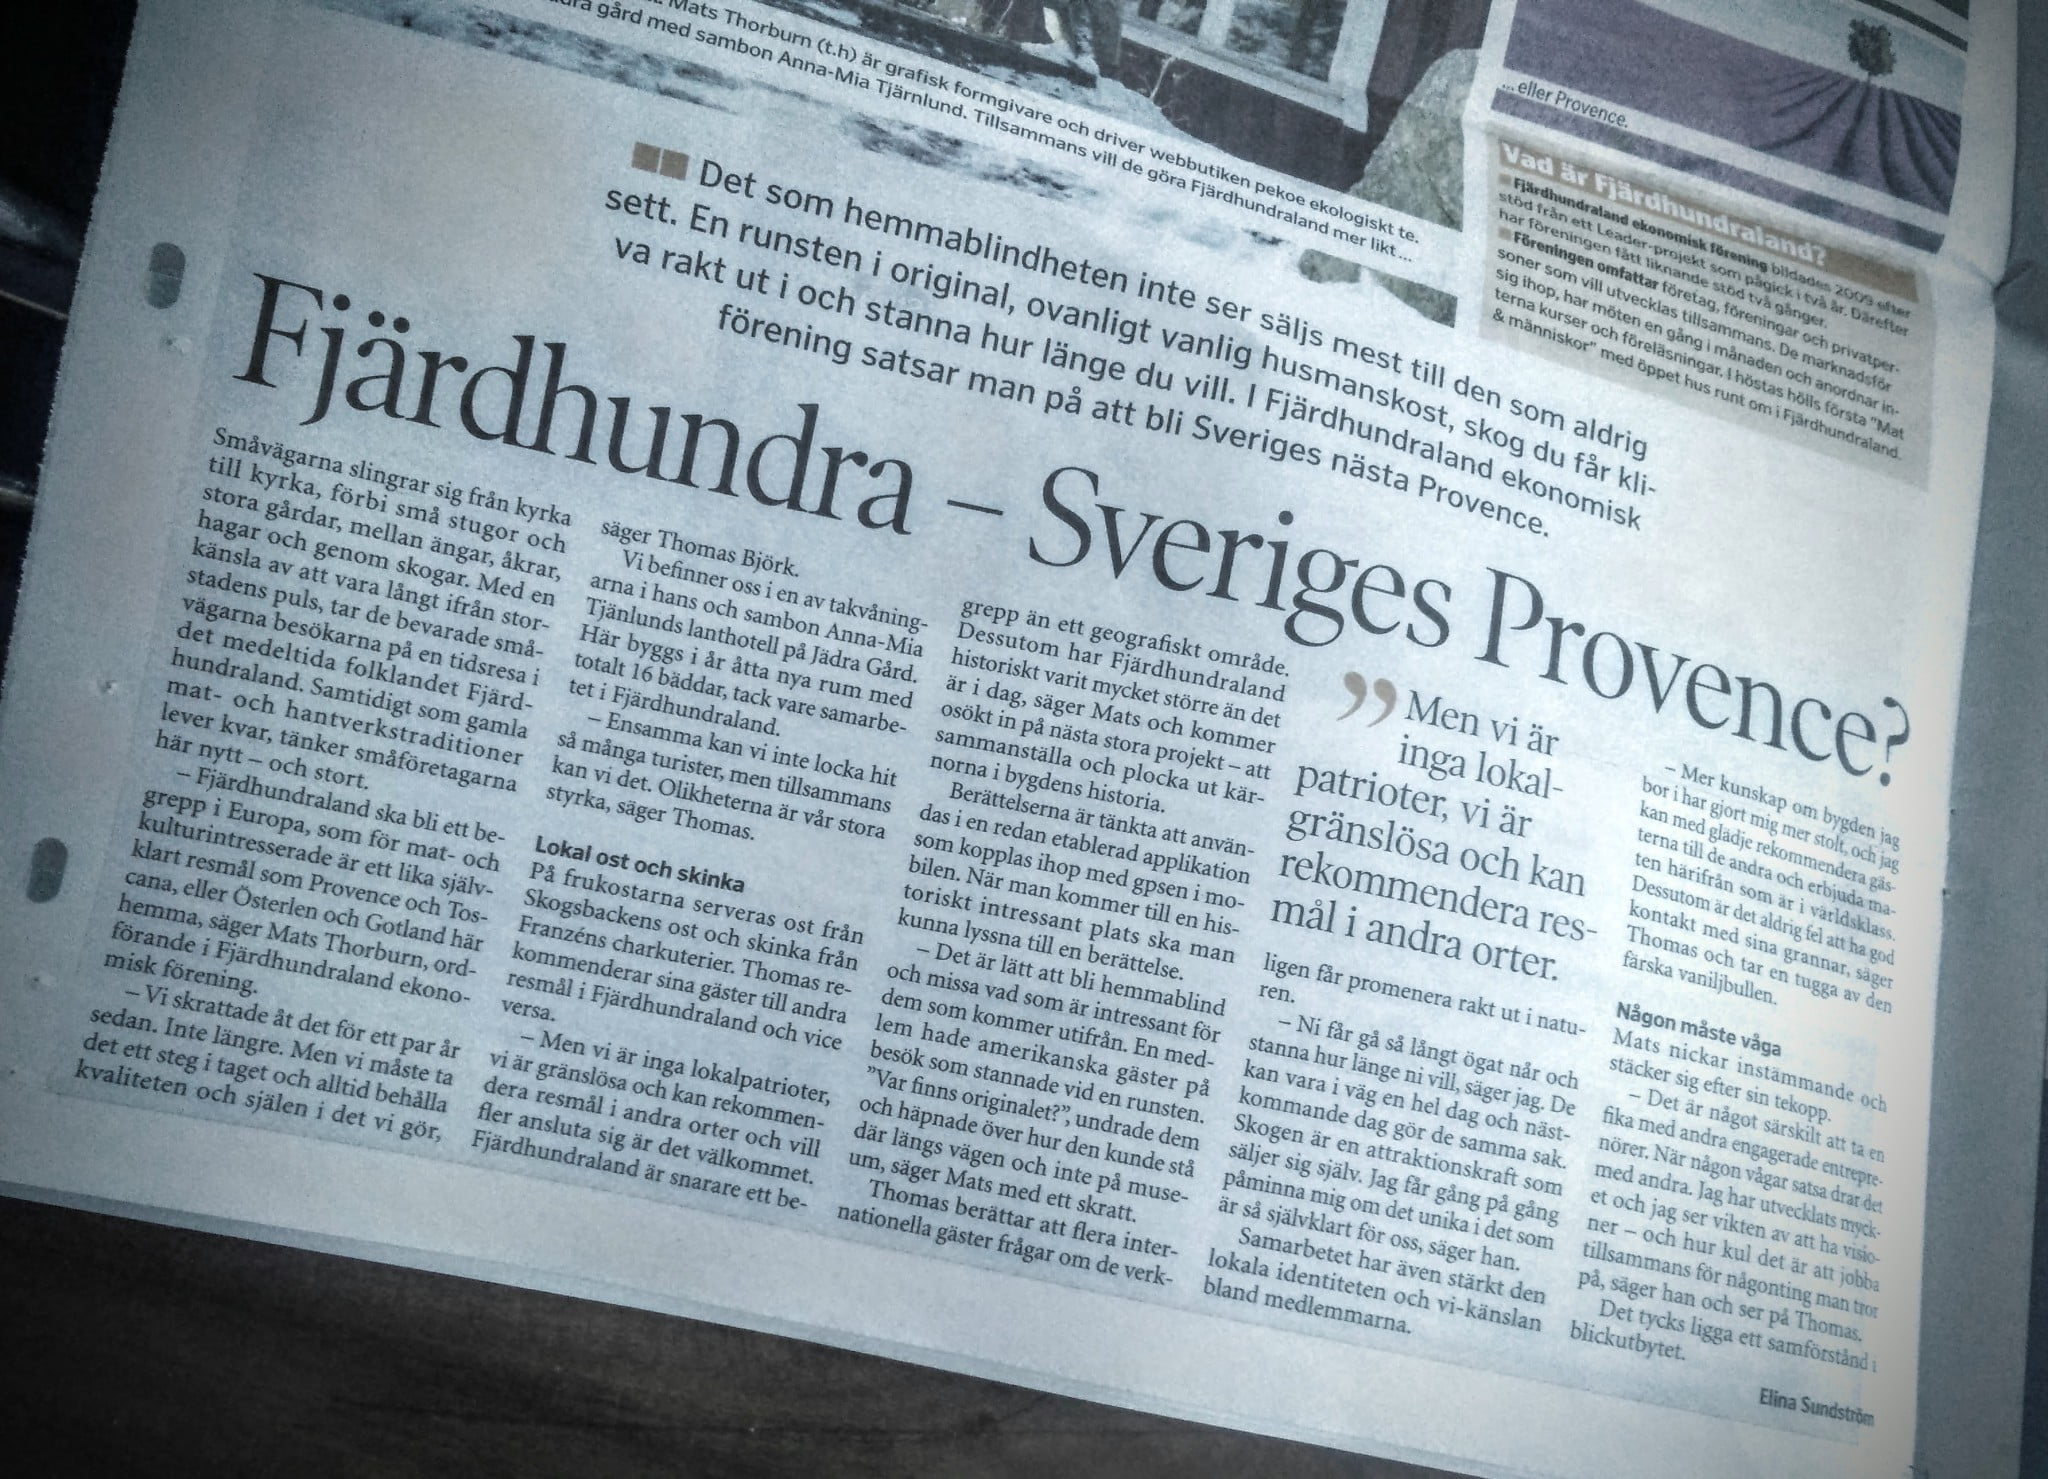 Article about Fjärdhundraland in the Ena-Håbotidningen